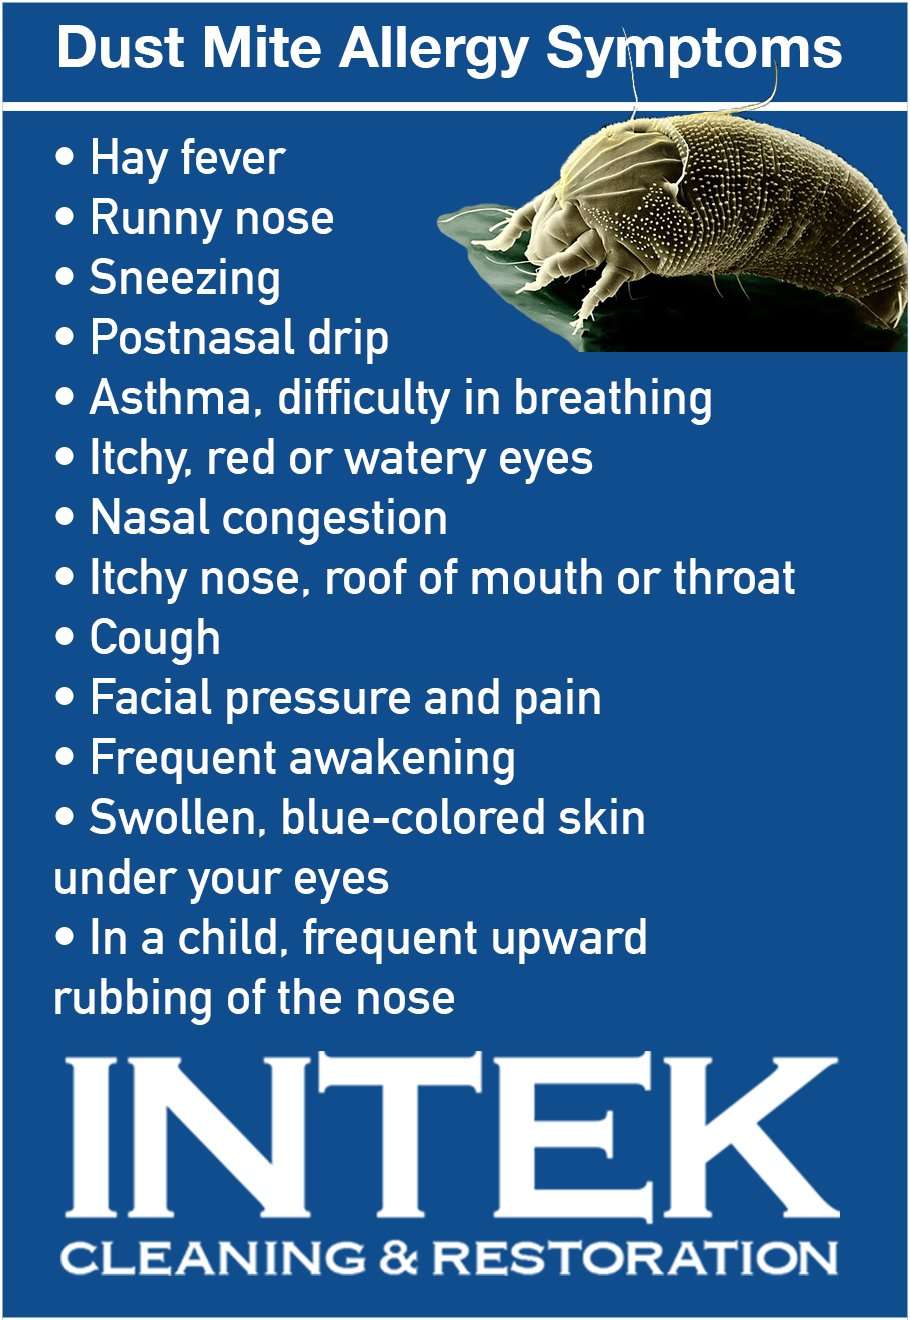 Dust mite allergy symptoms